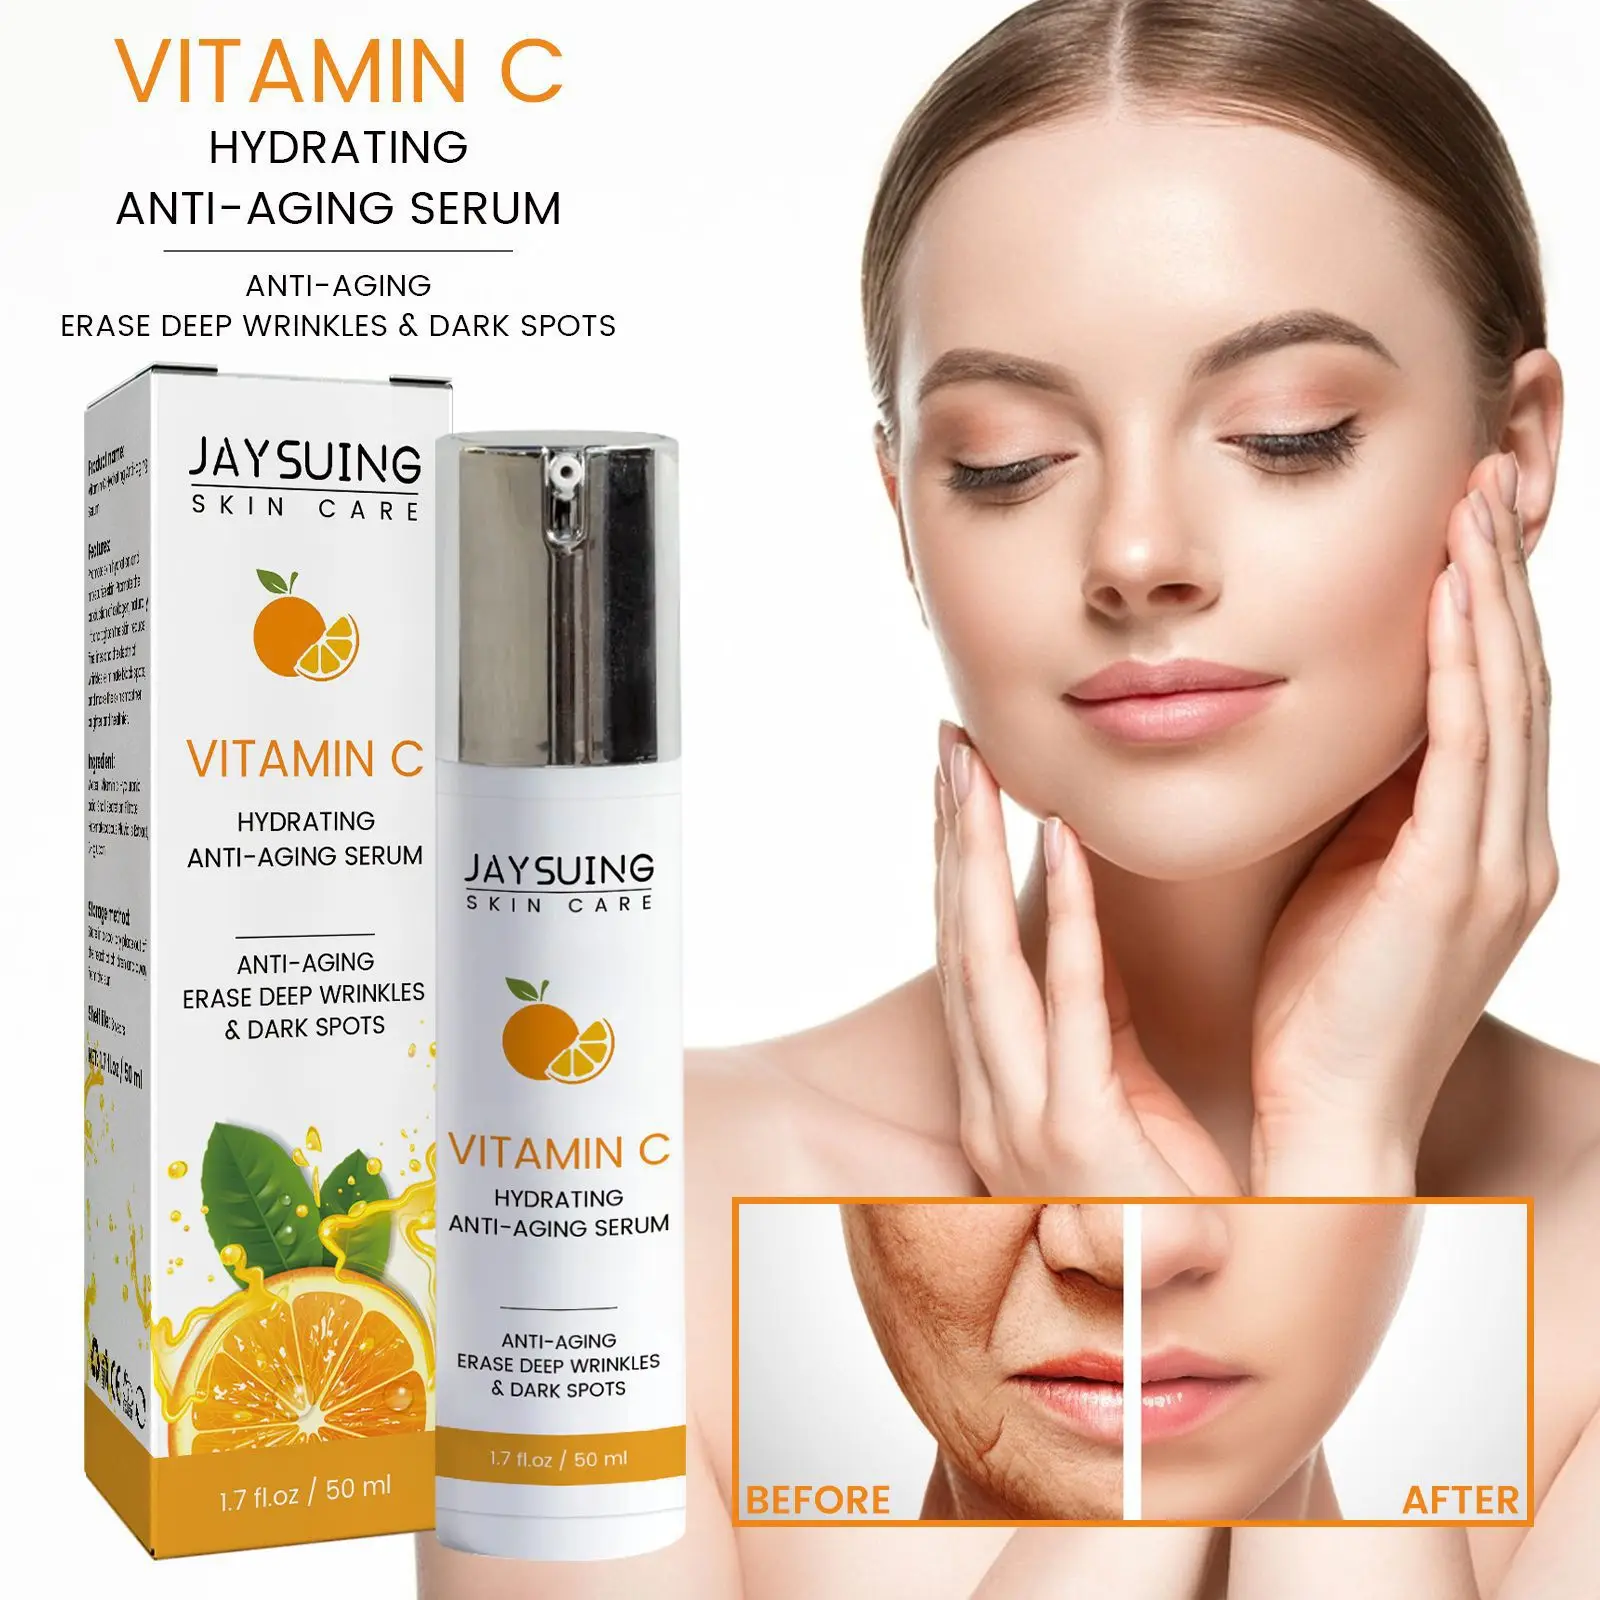 

Vitamin C Hydrating Anti-Aging Serum Erase Deep Wrinkles Dark Spots Natural Antioxidant Boost Collagen Natural Lift Firms Smooth